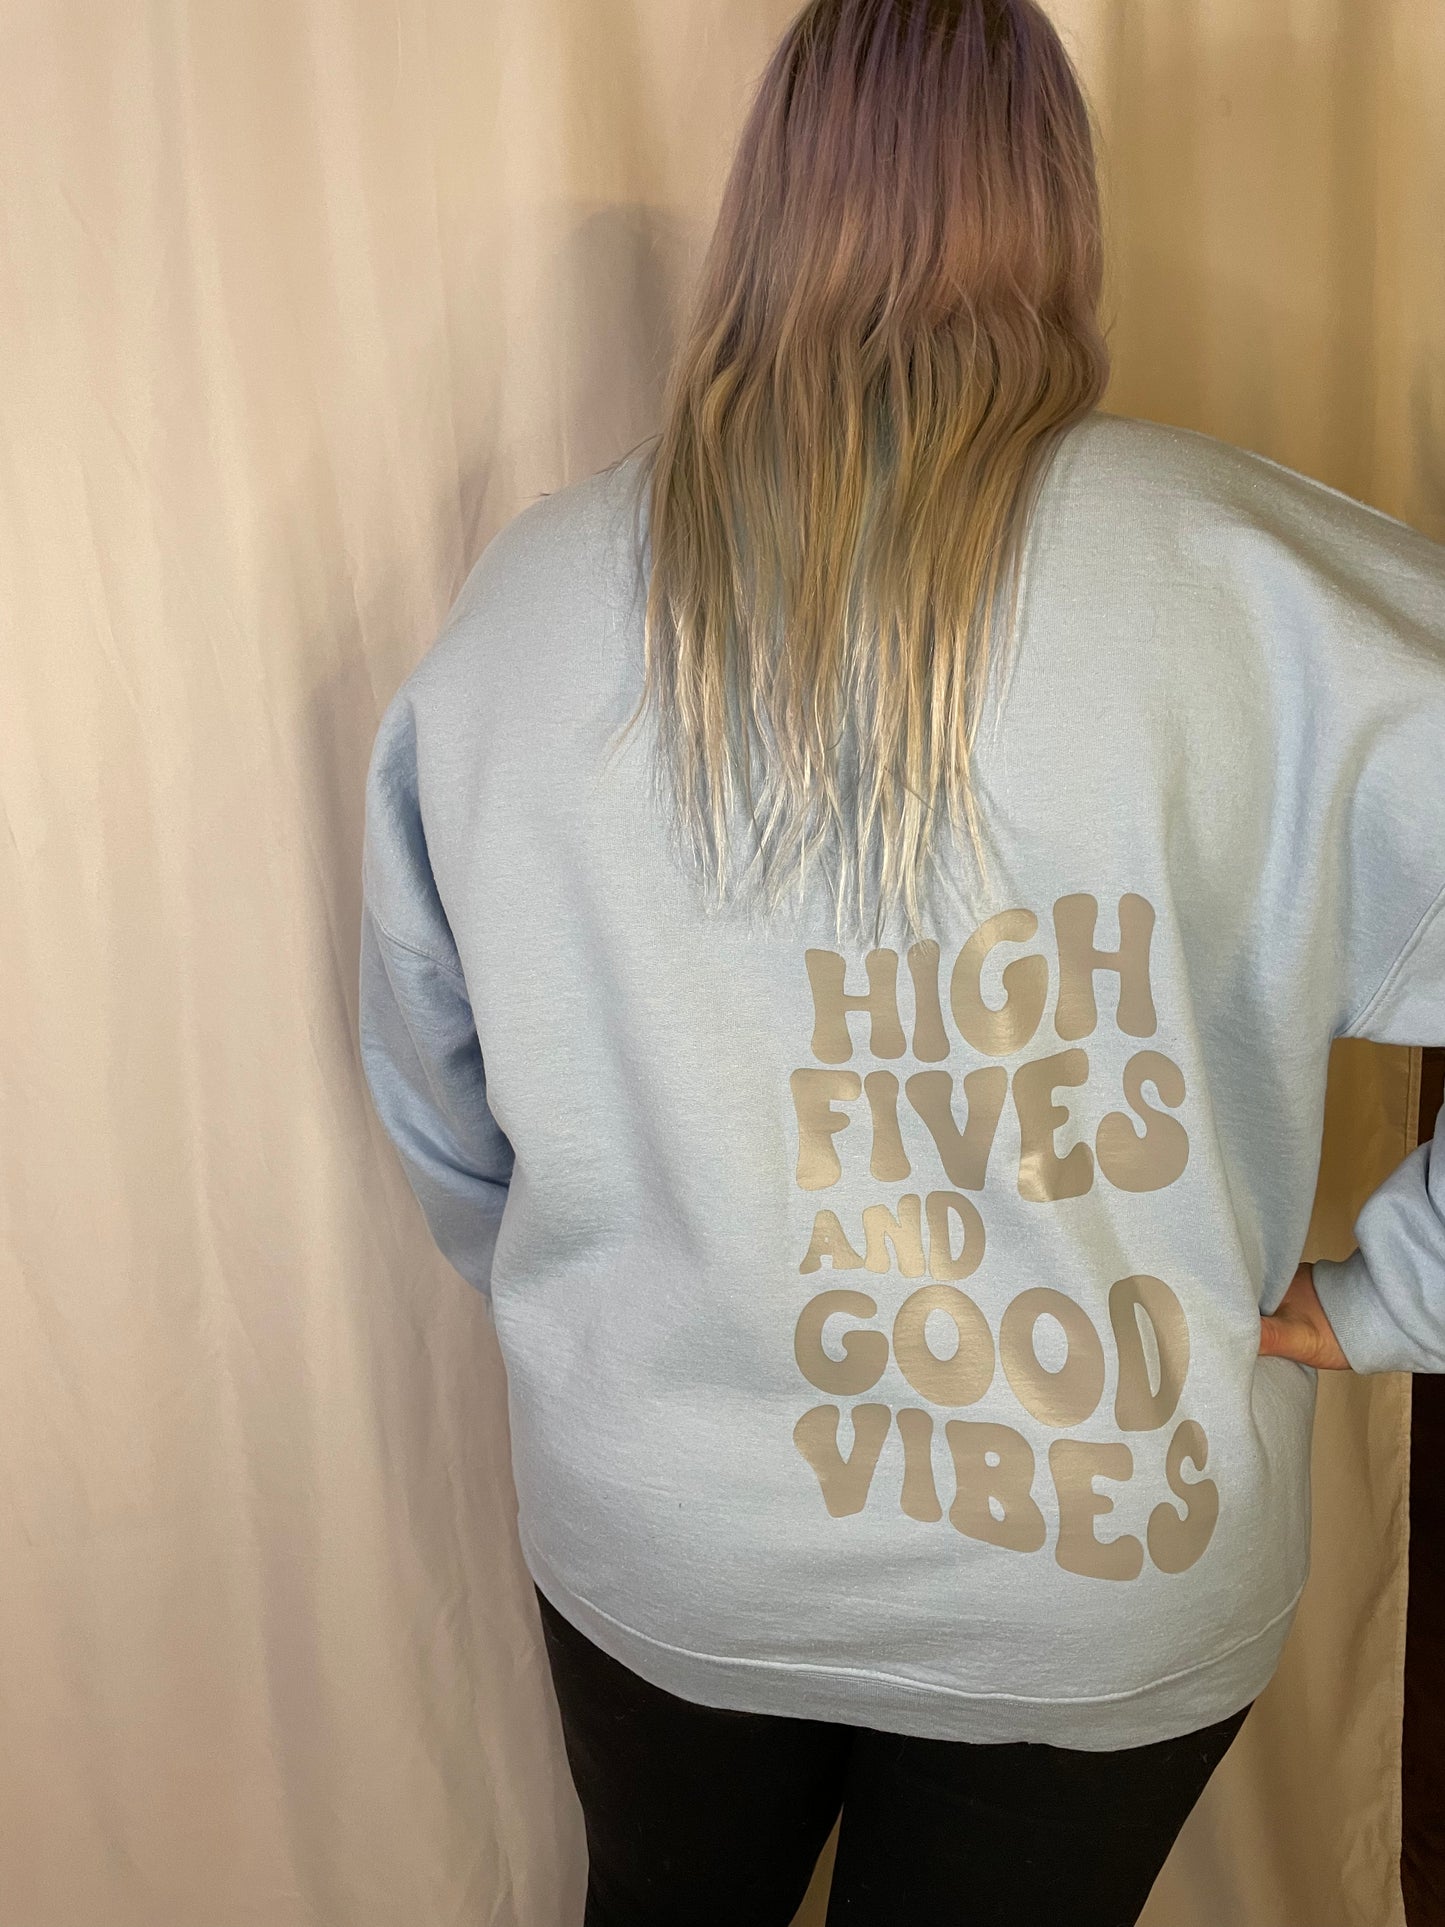 High 5's & Good Vibes